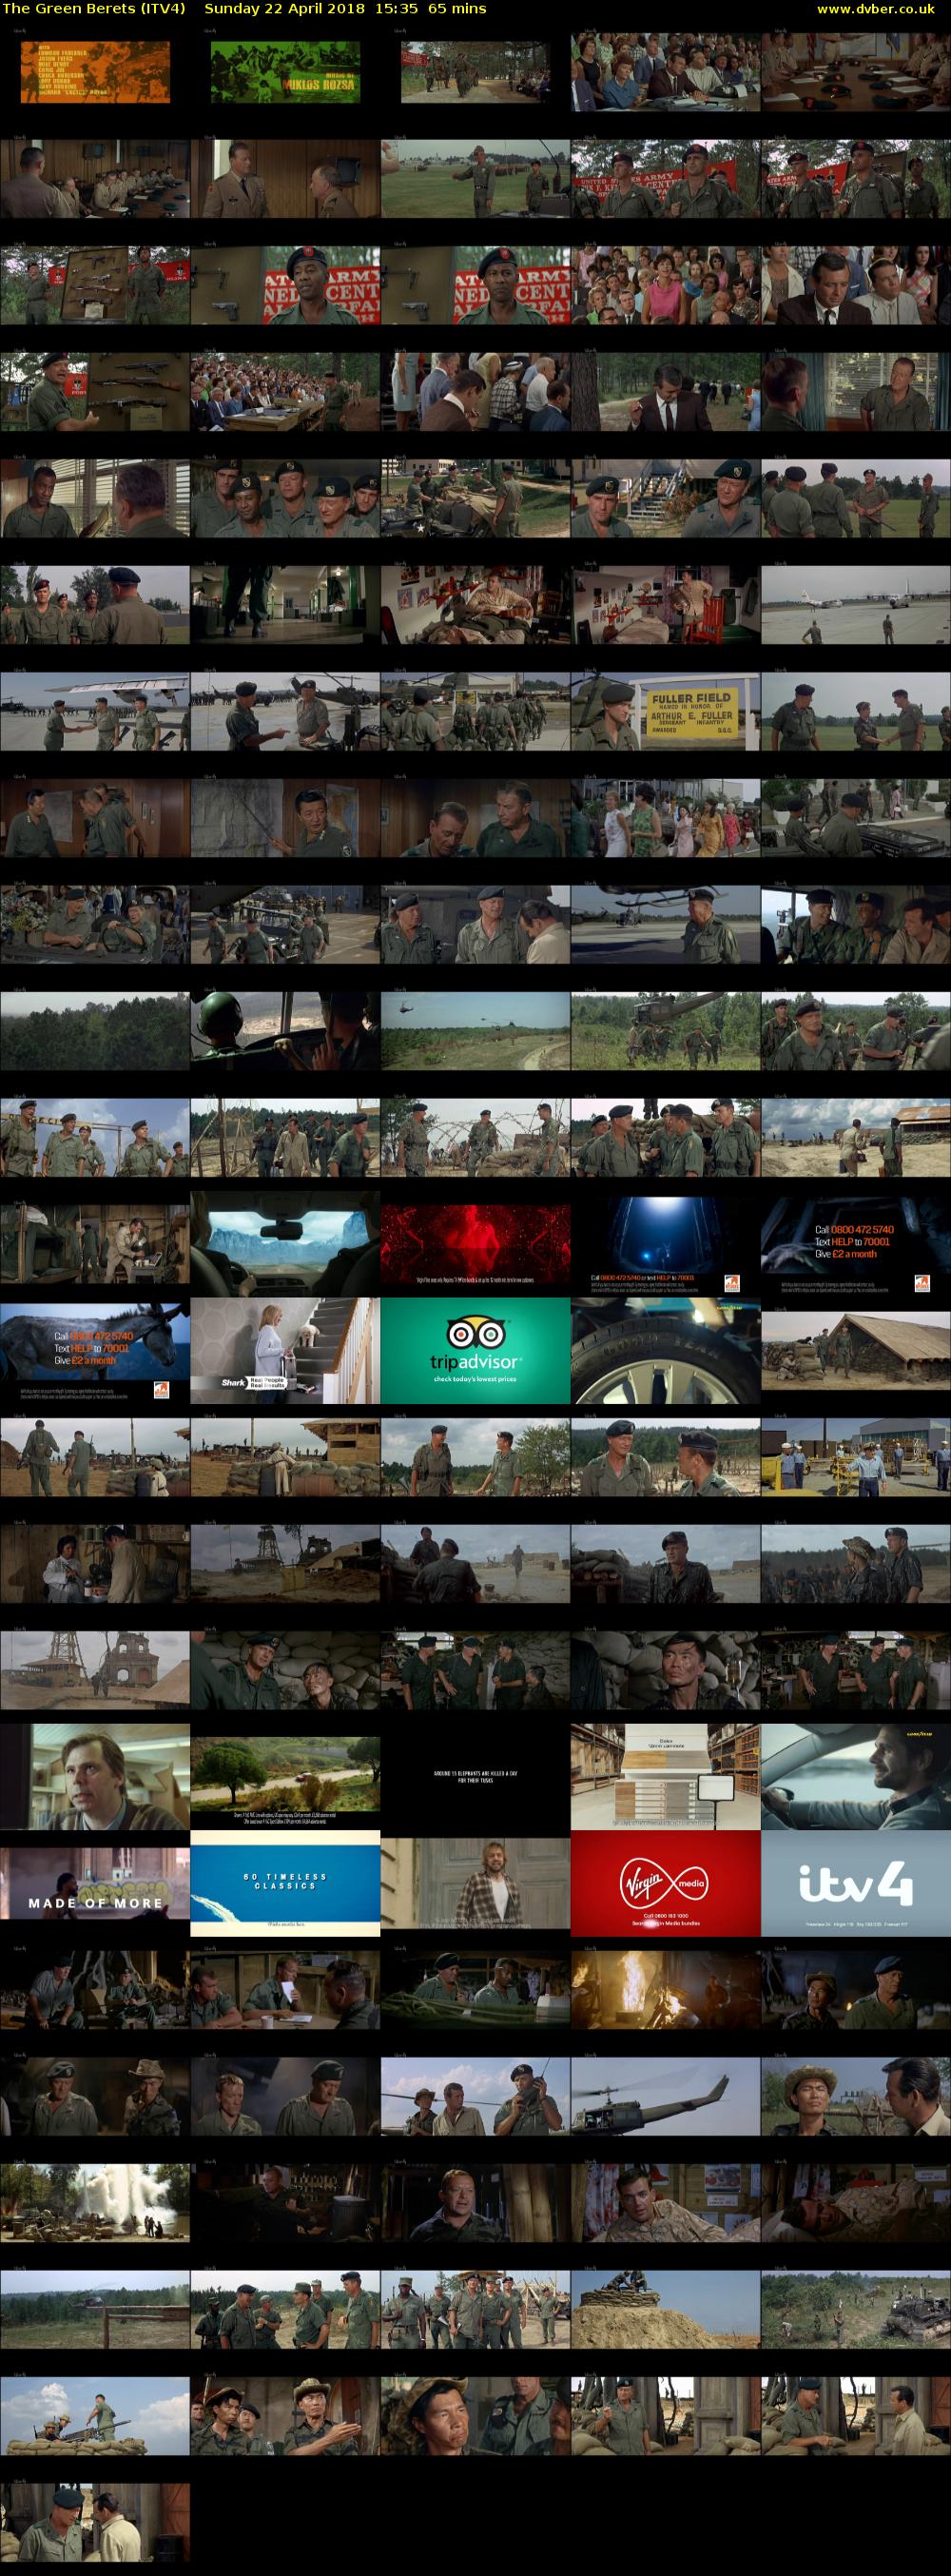 The Green Berets (ITV4) Sunday 22 April 2018 15:35 - 16:40